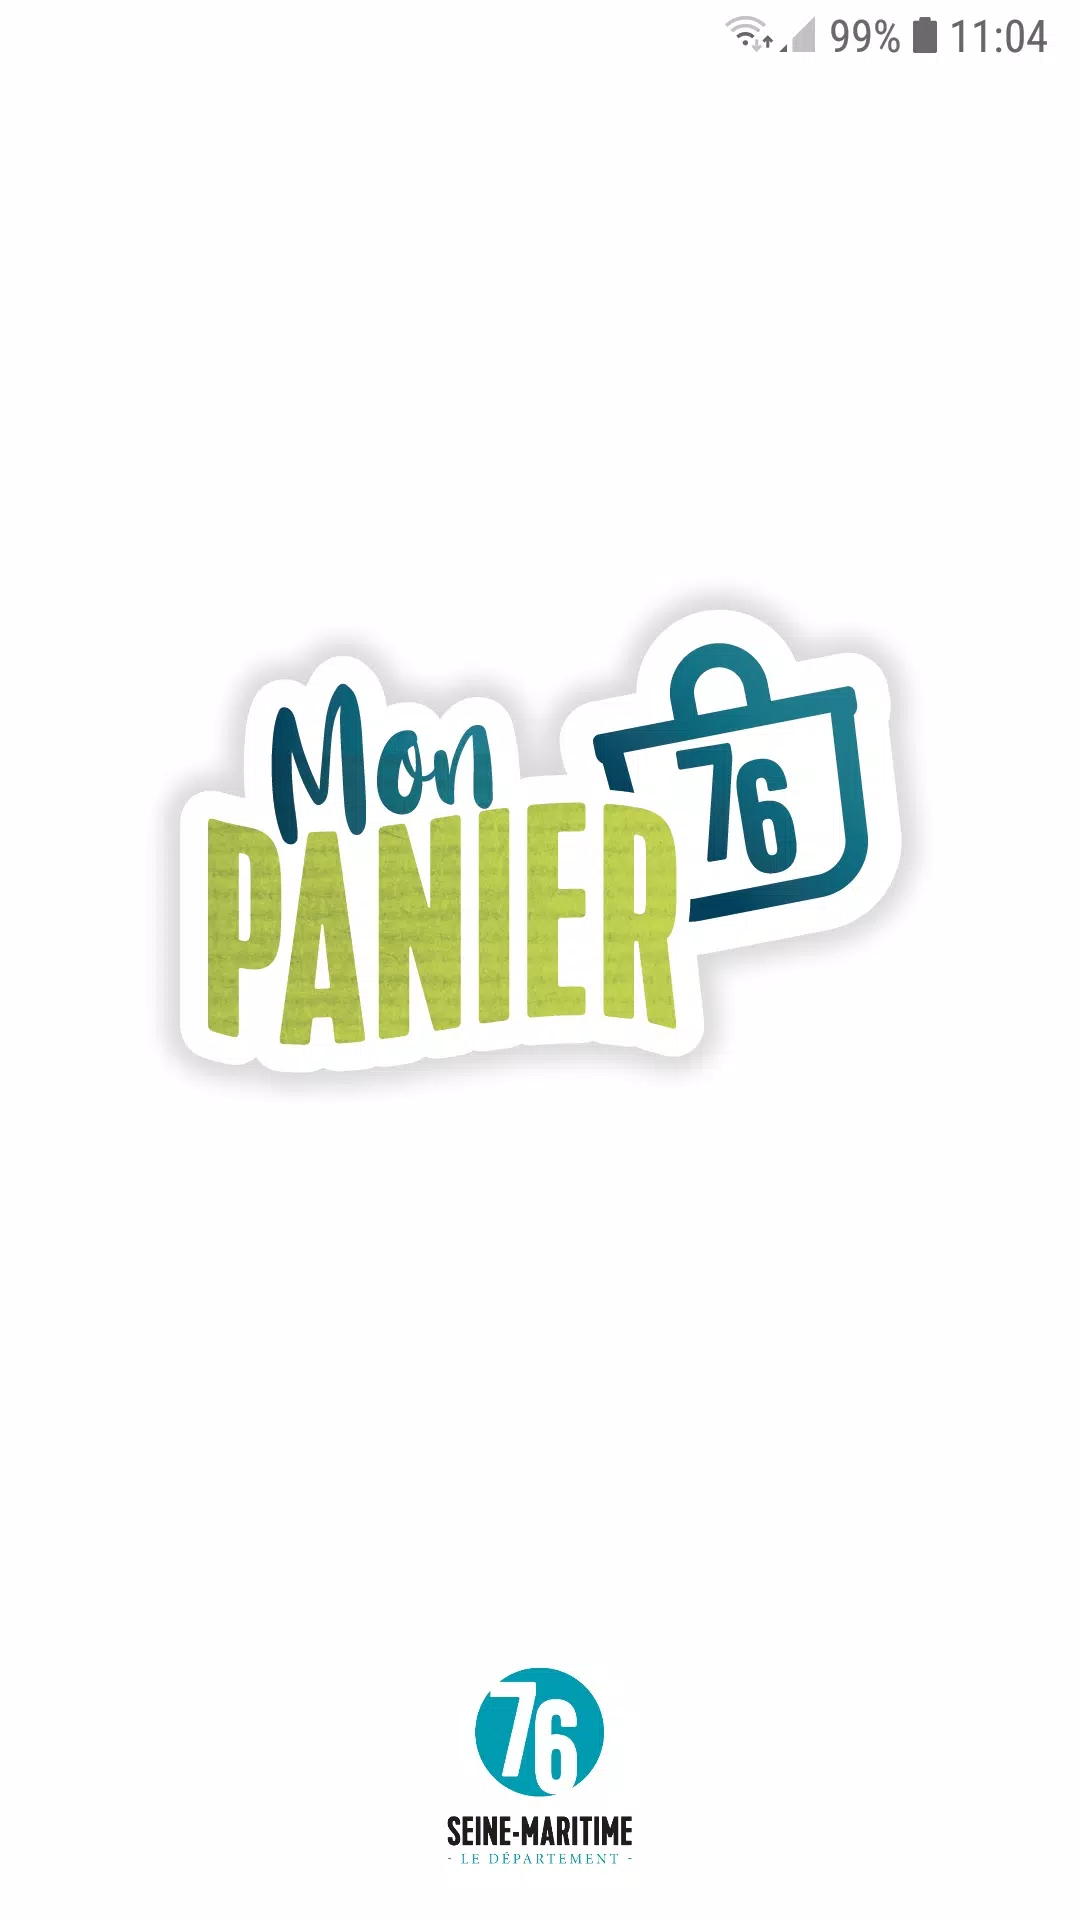 Mon Panier 76安卓版应用APK下载